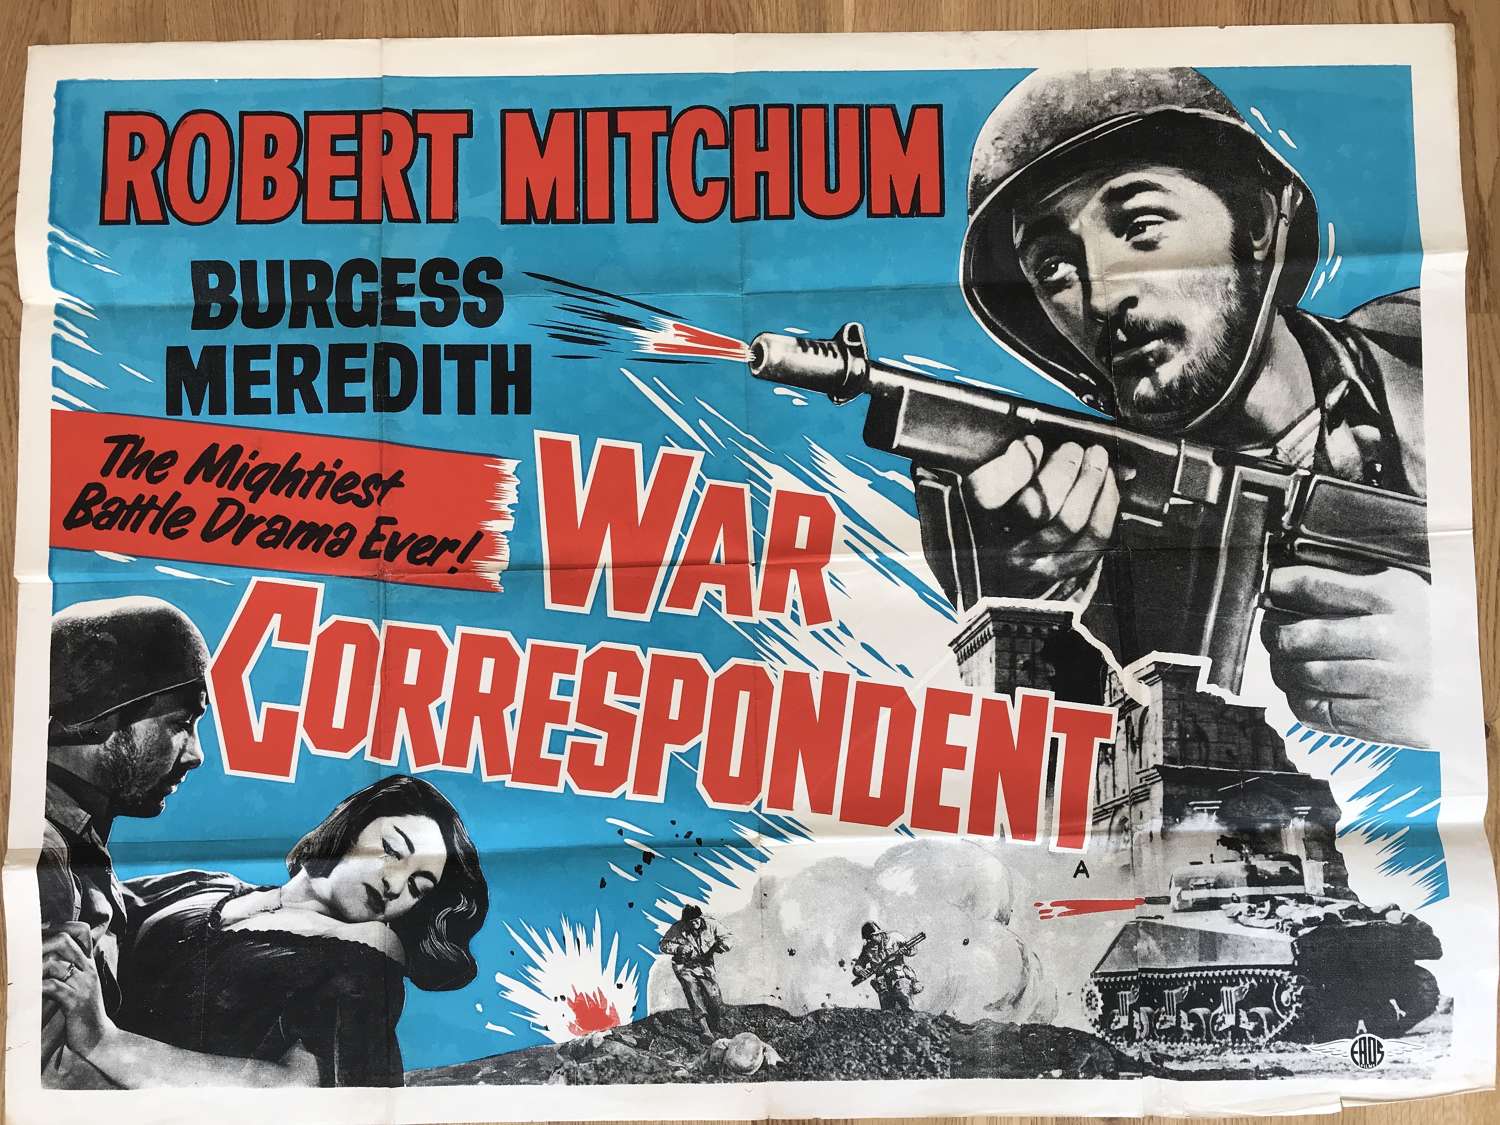 War correspondence film poster dated 1945/6